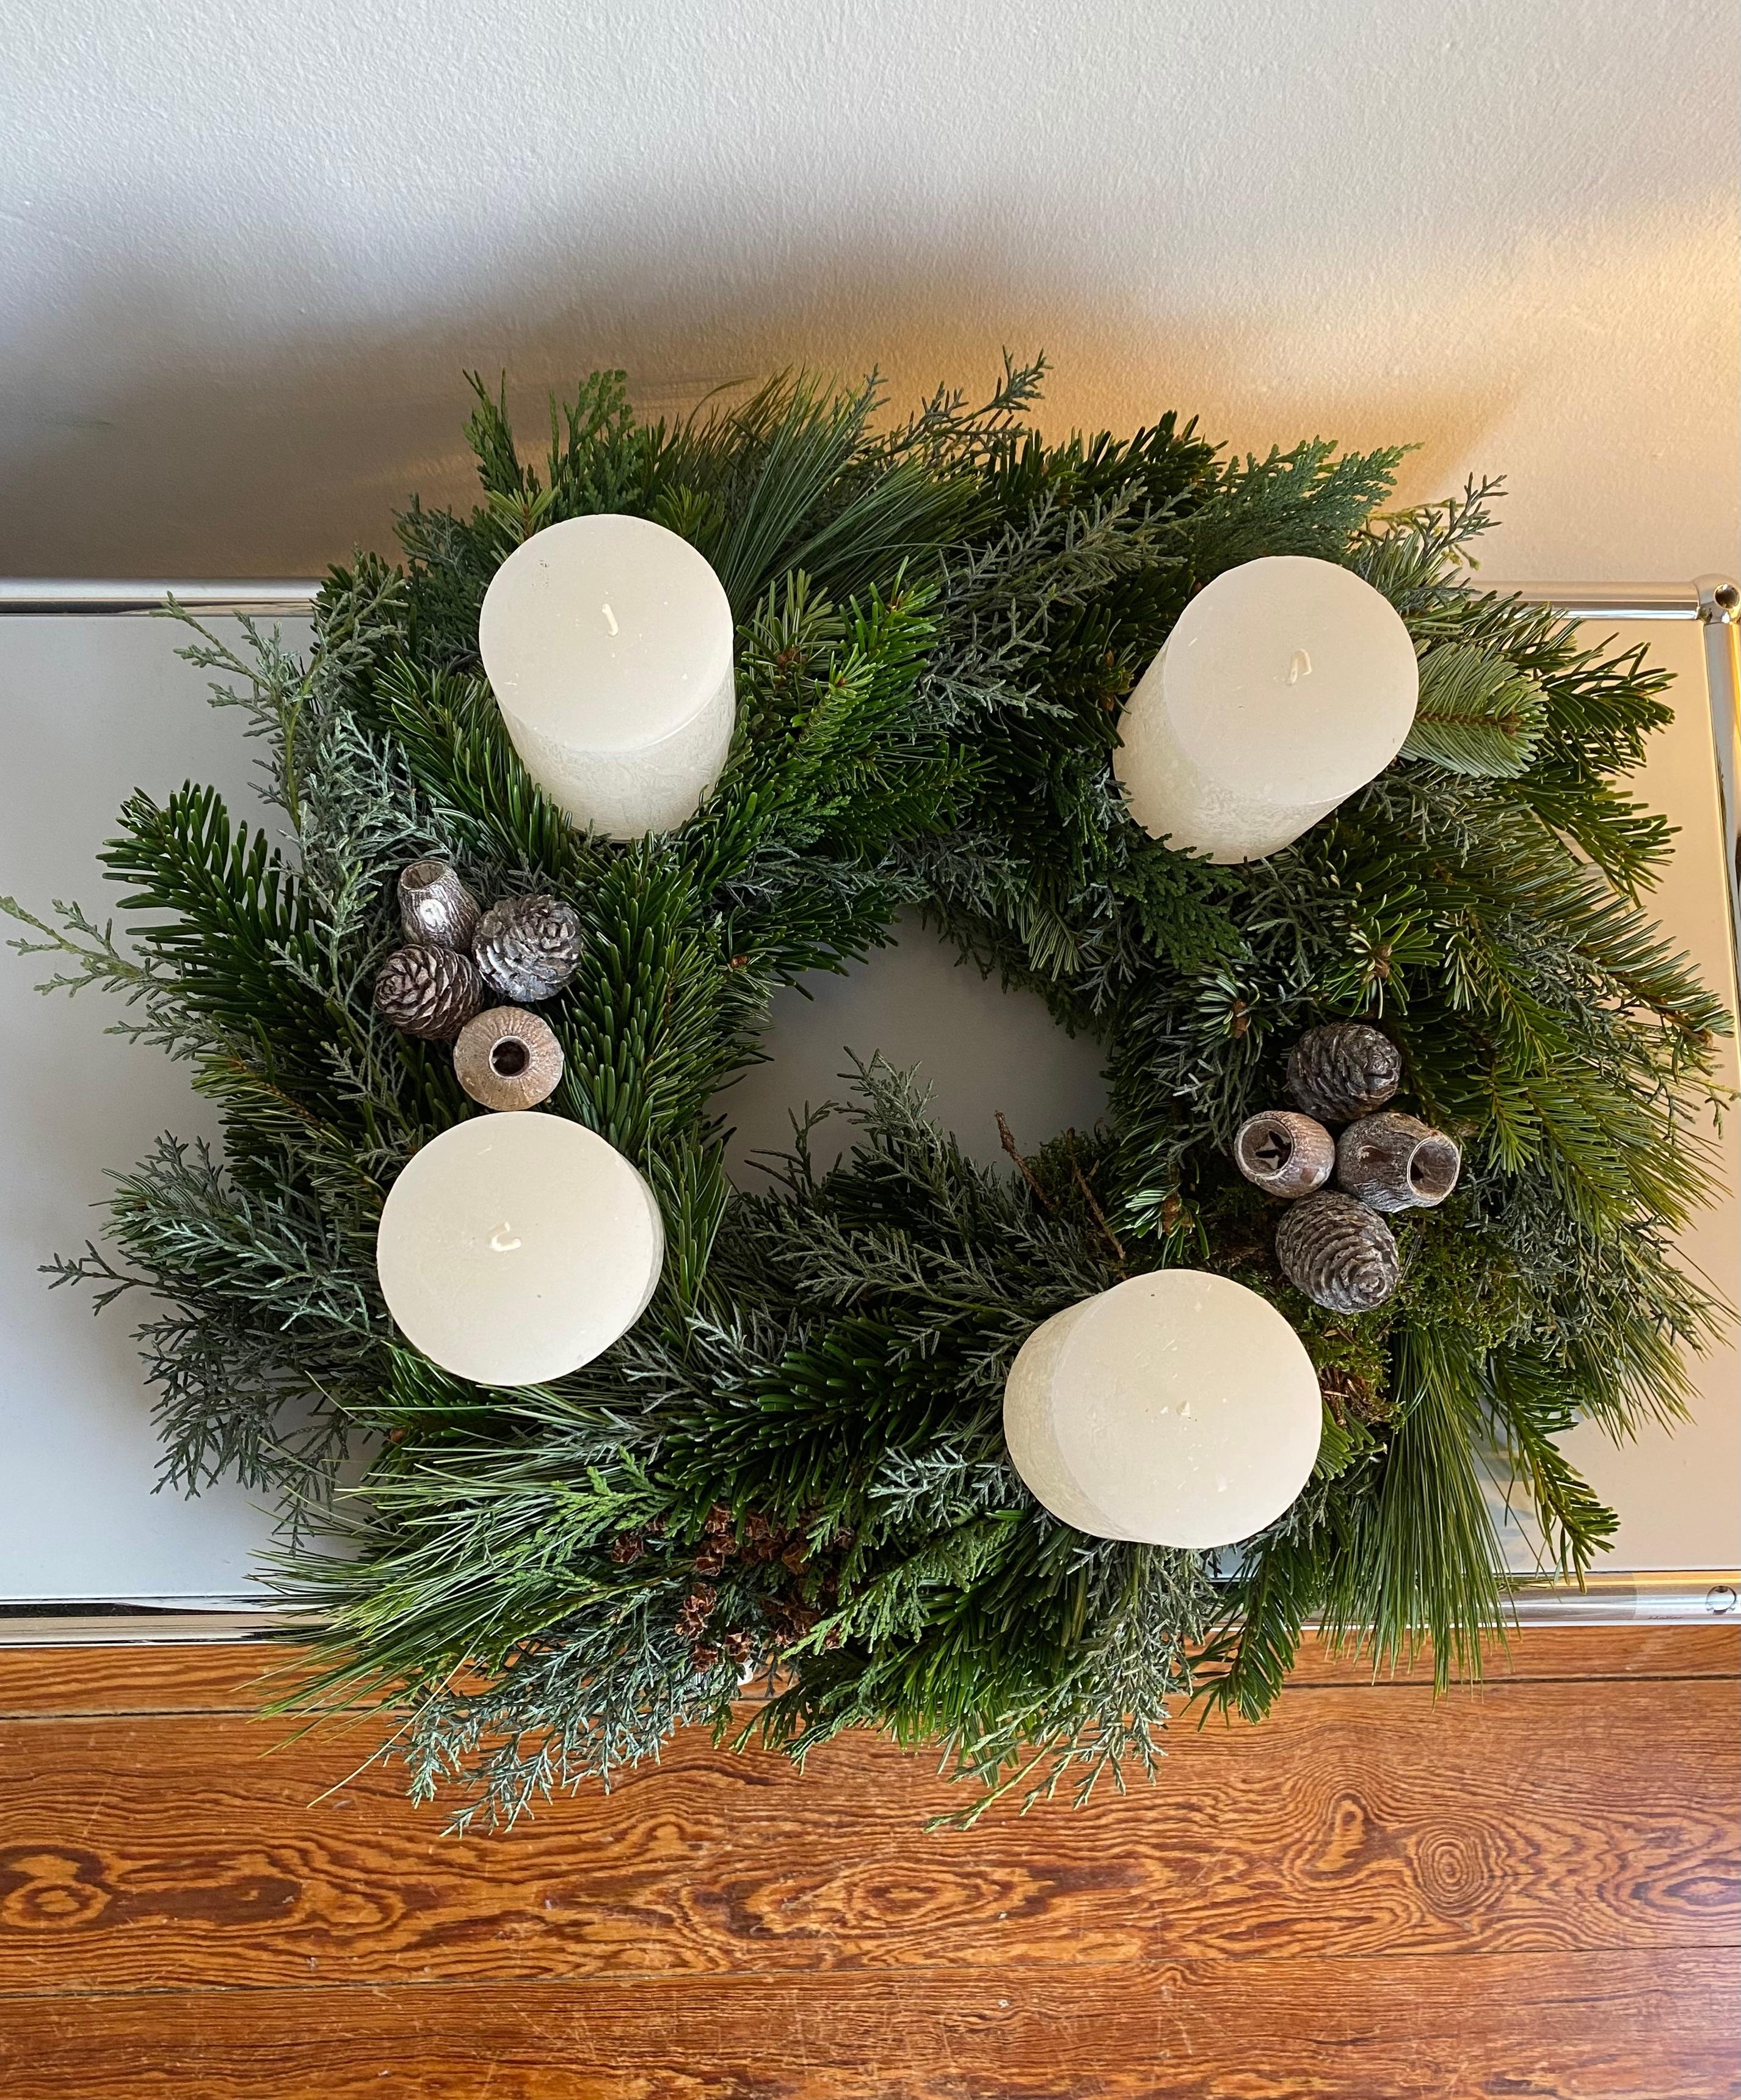 Christmas is coming!
#DIY #Adventskranz #minimalism